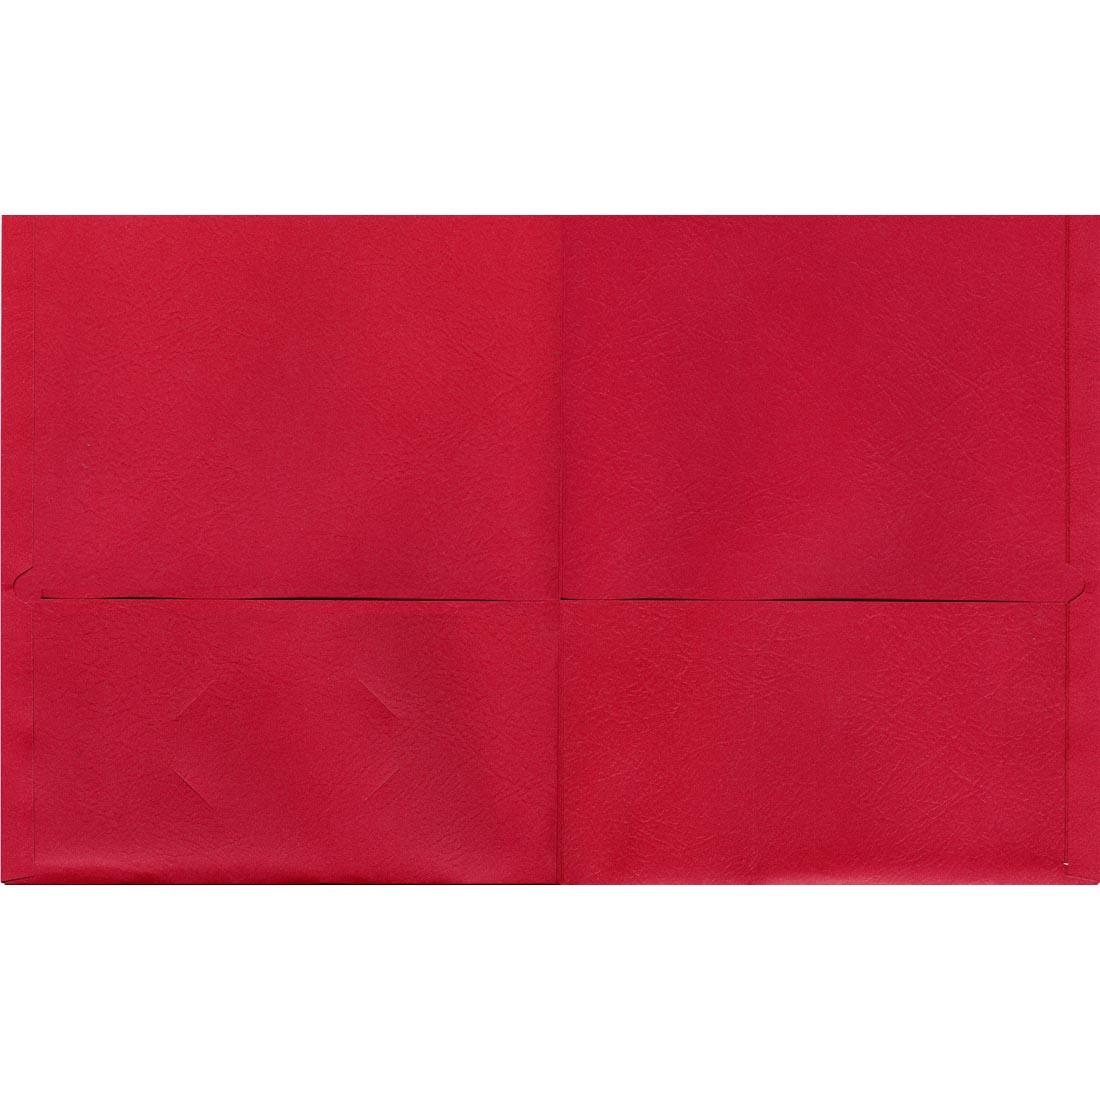 Red Oxford Twin Pocket Portfolio shown open